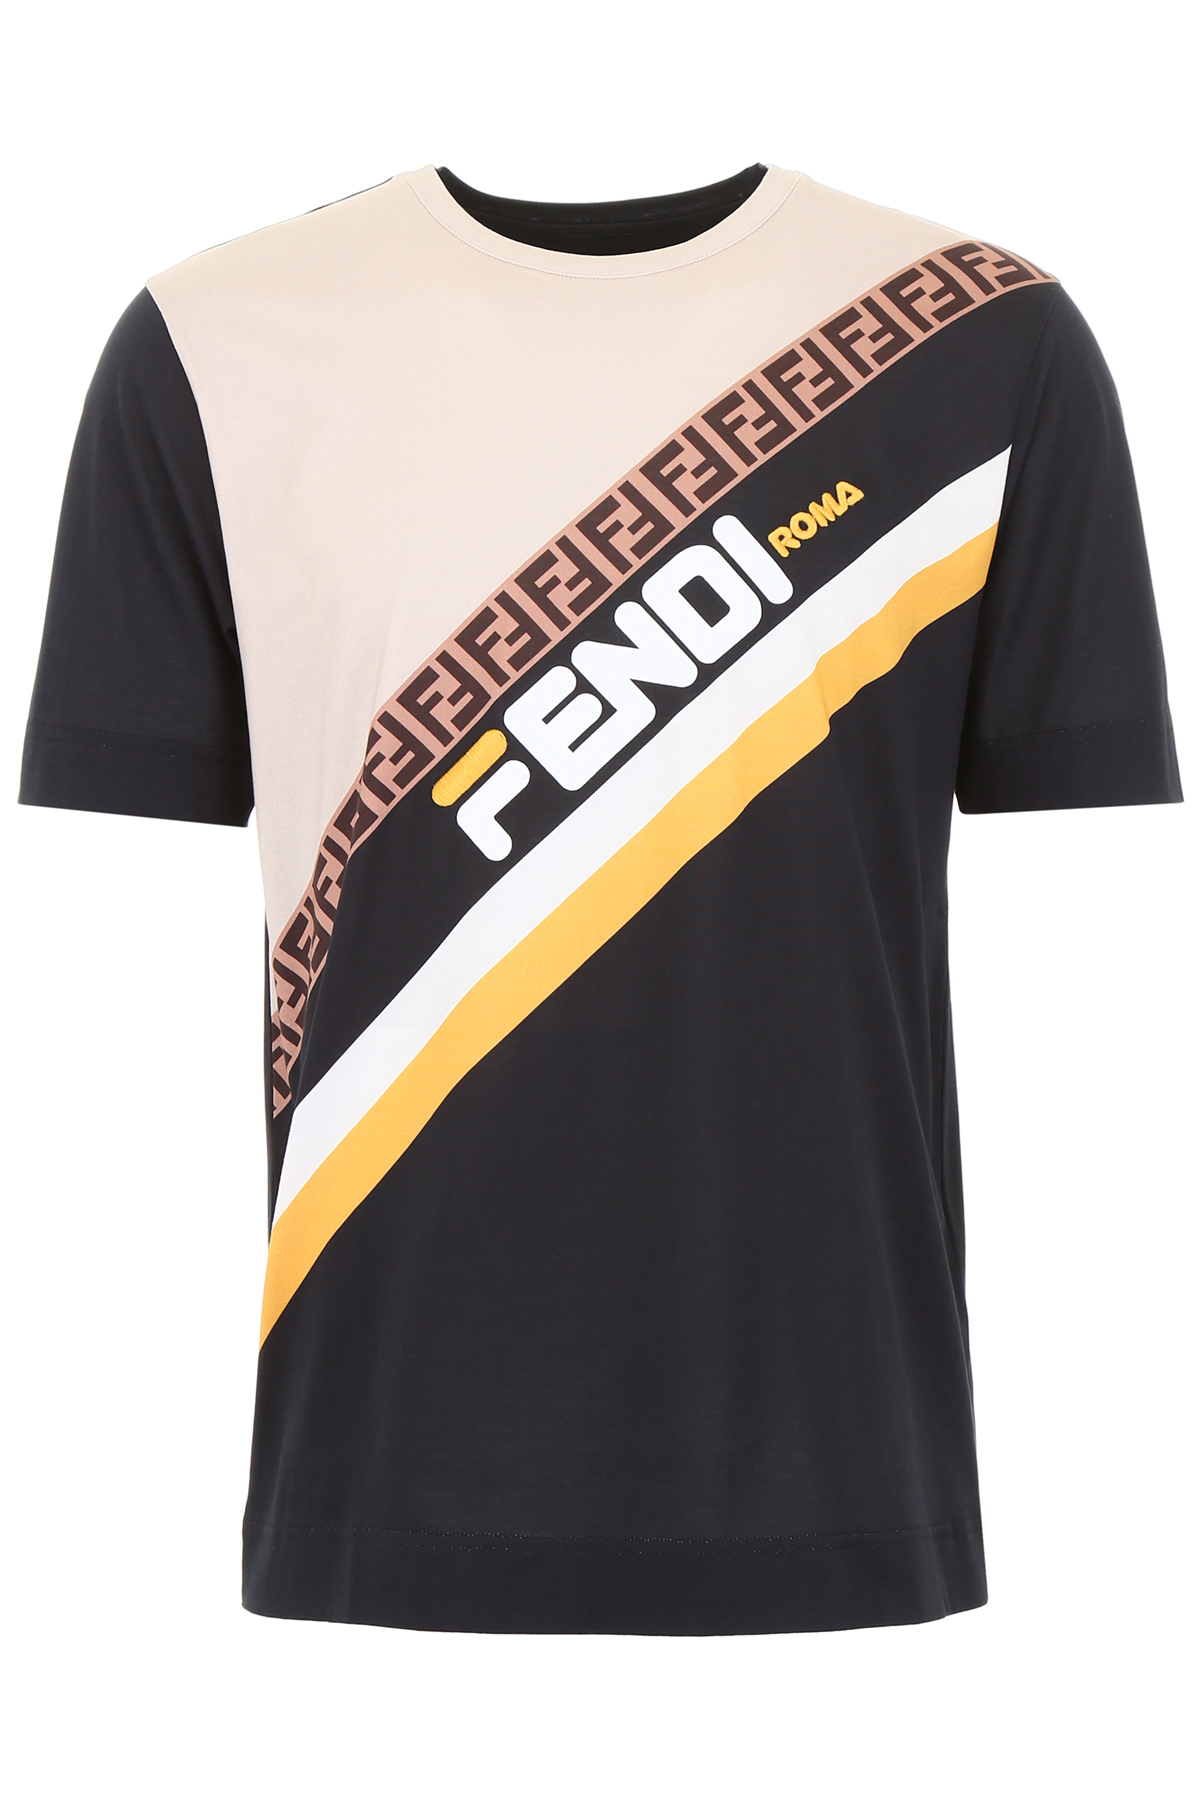 Fendi Fila T Shirt Discount, 56% OFF | www.ingeniovirtual.com